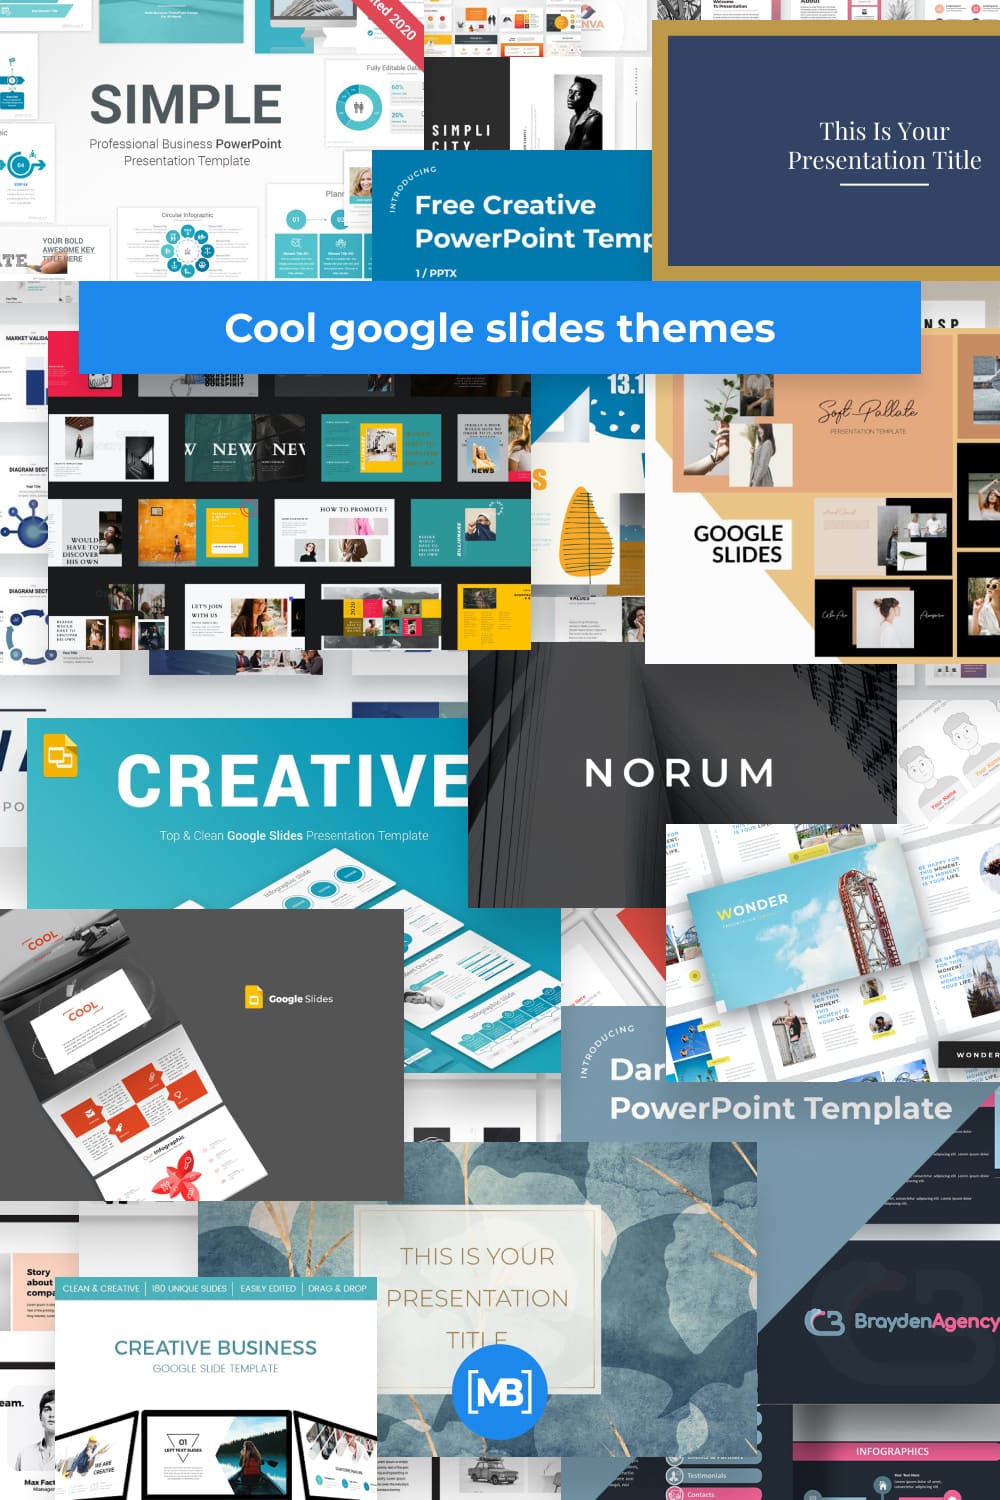 Cool Google Slides Themes - Pinterest.